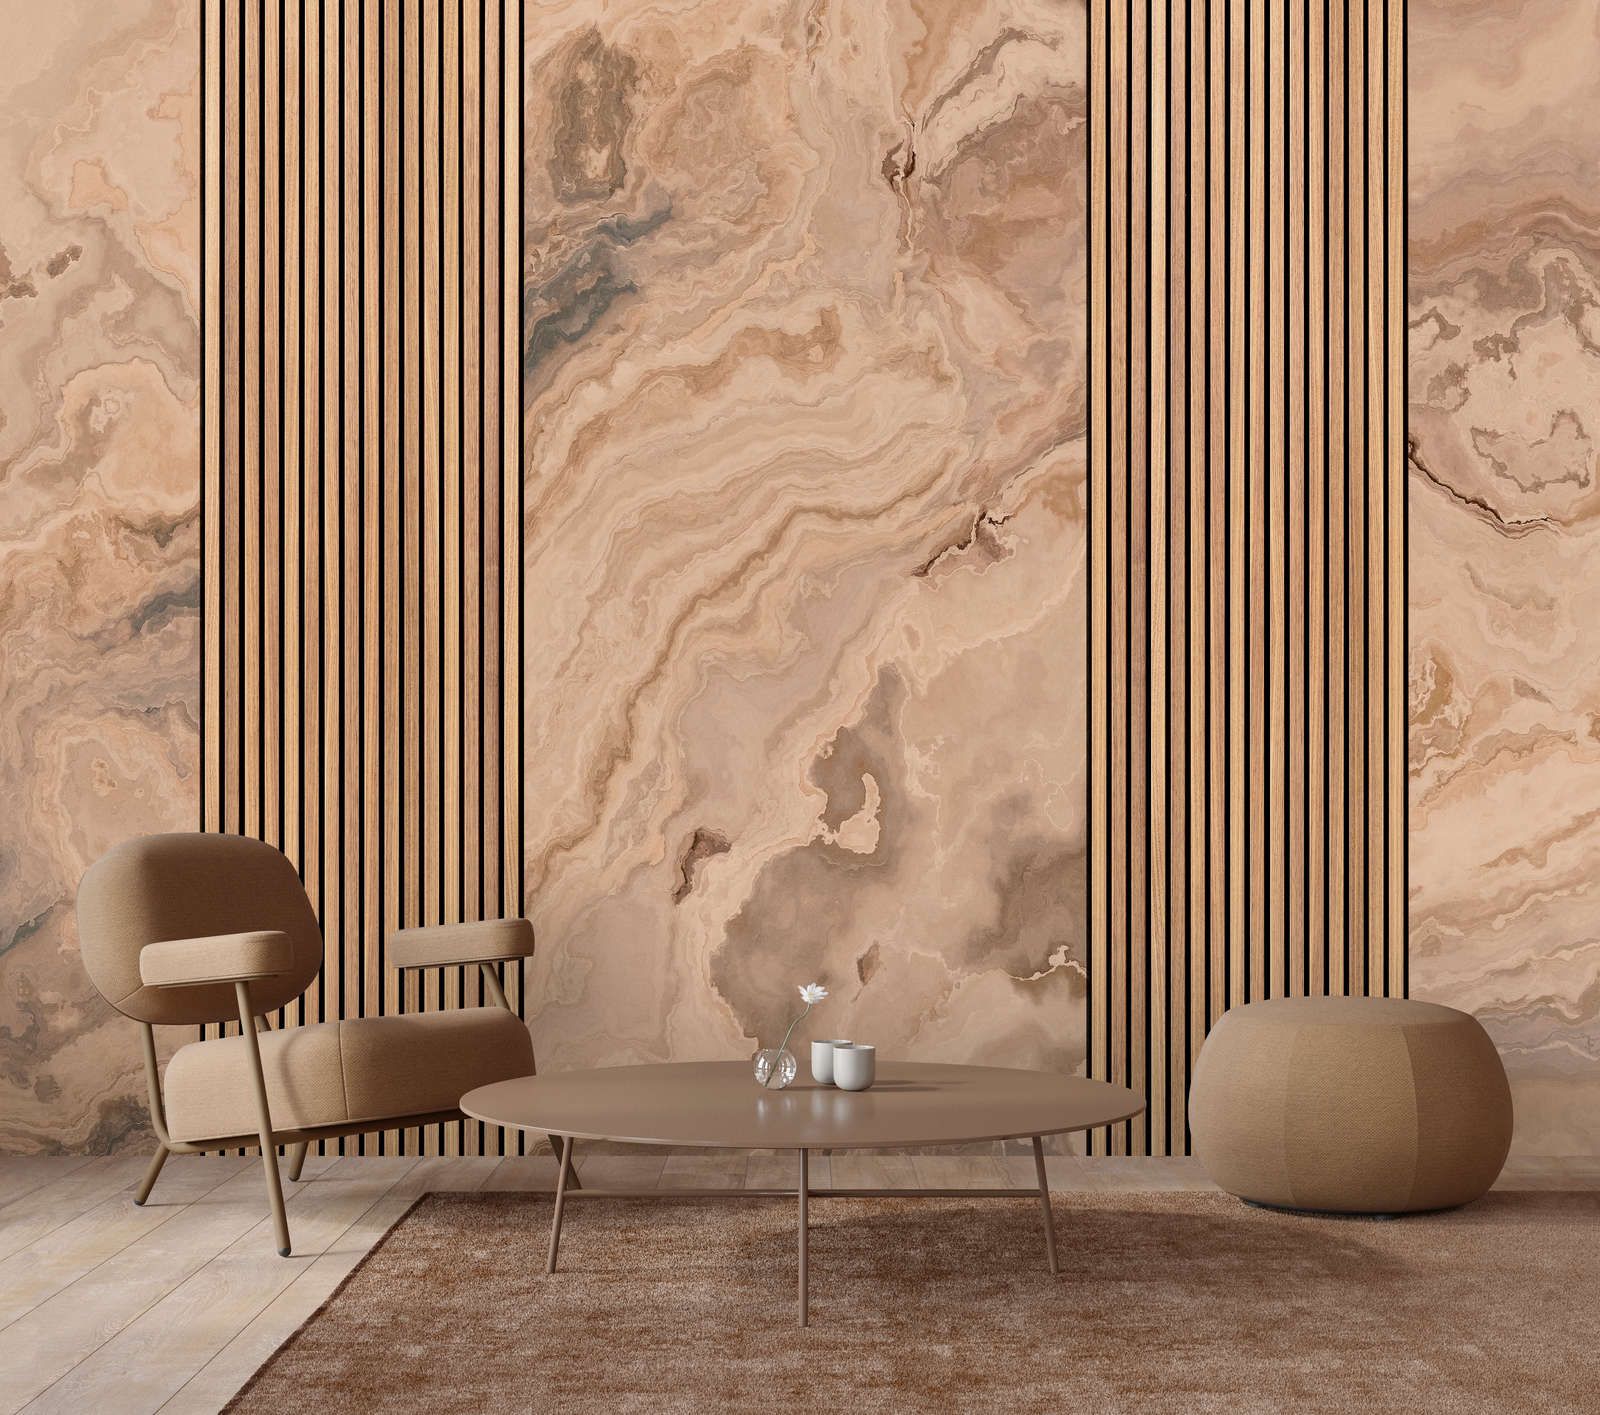             Photo wallpaper »travertino 2« - Panels & Marble - Light brown | Matt, Smooth non-woven
        